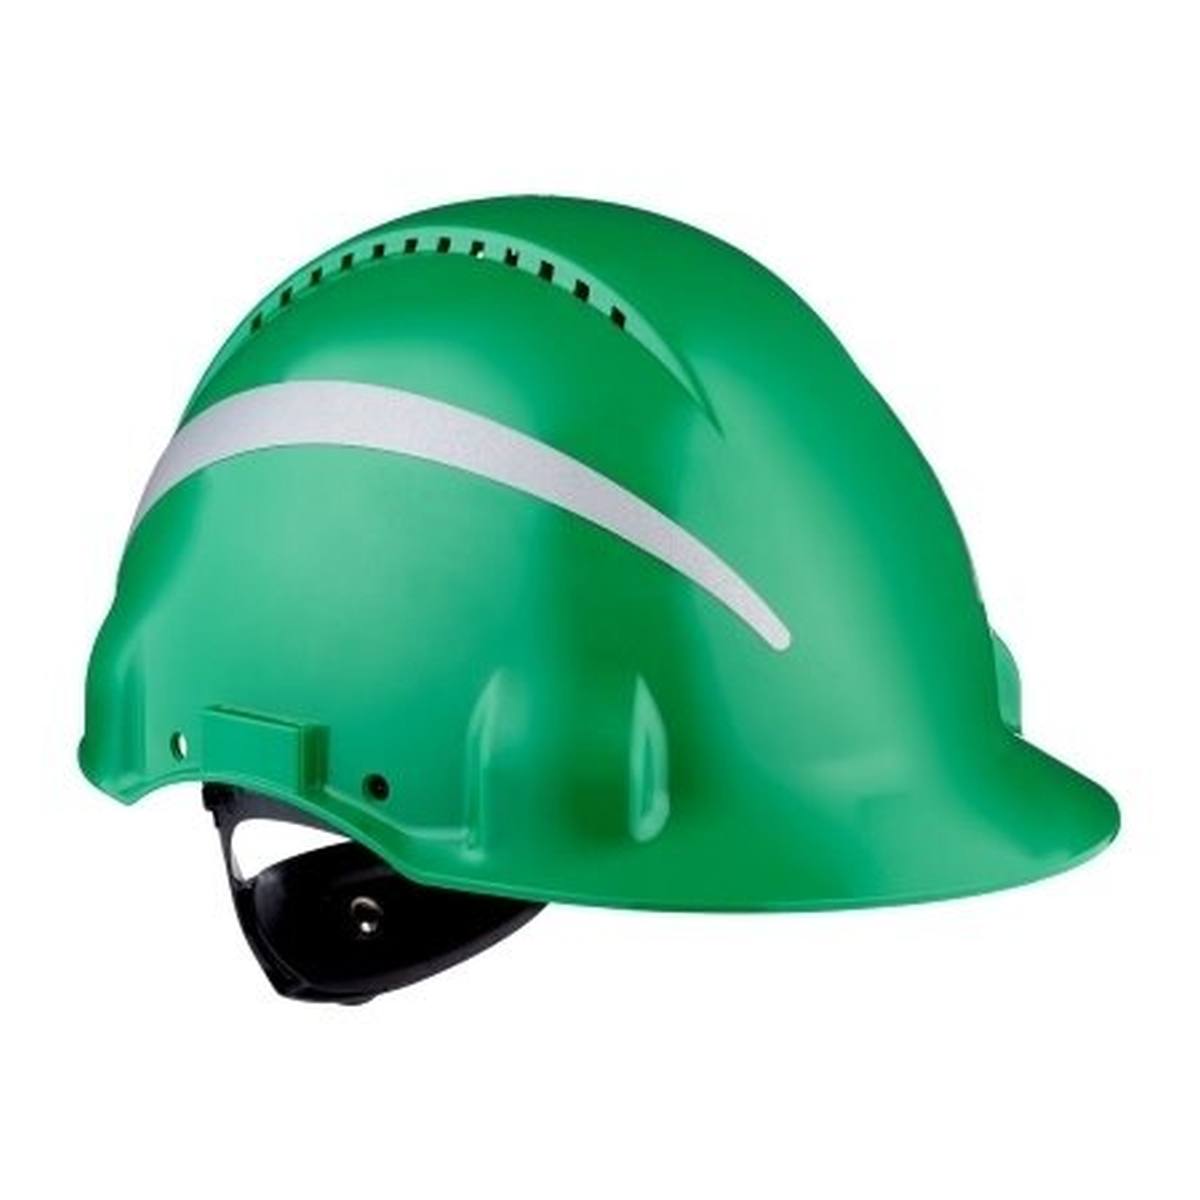 3M G3000 veiligheidshelm met UV-indicator, groen, ABS, geventileerde ratelsluiting, kunststof zweetband, reflecterende sticker